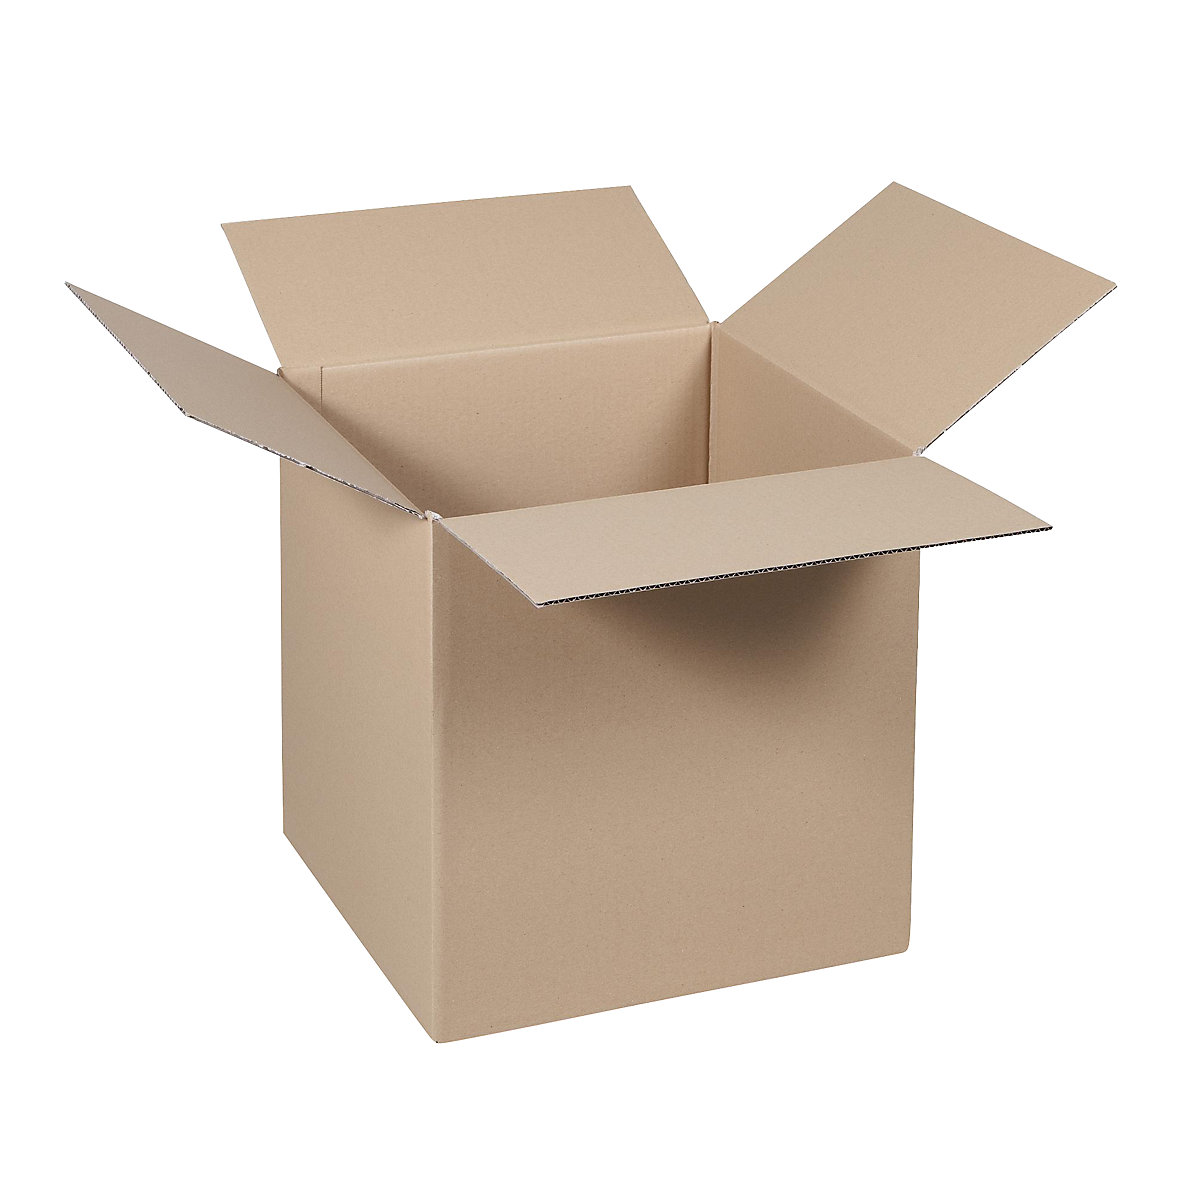 Folding cardboard box, FEFCO 0201, made of single fluted cardboard, internal dimensions 300 x 300 x 300 mm, pack of 50-24